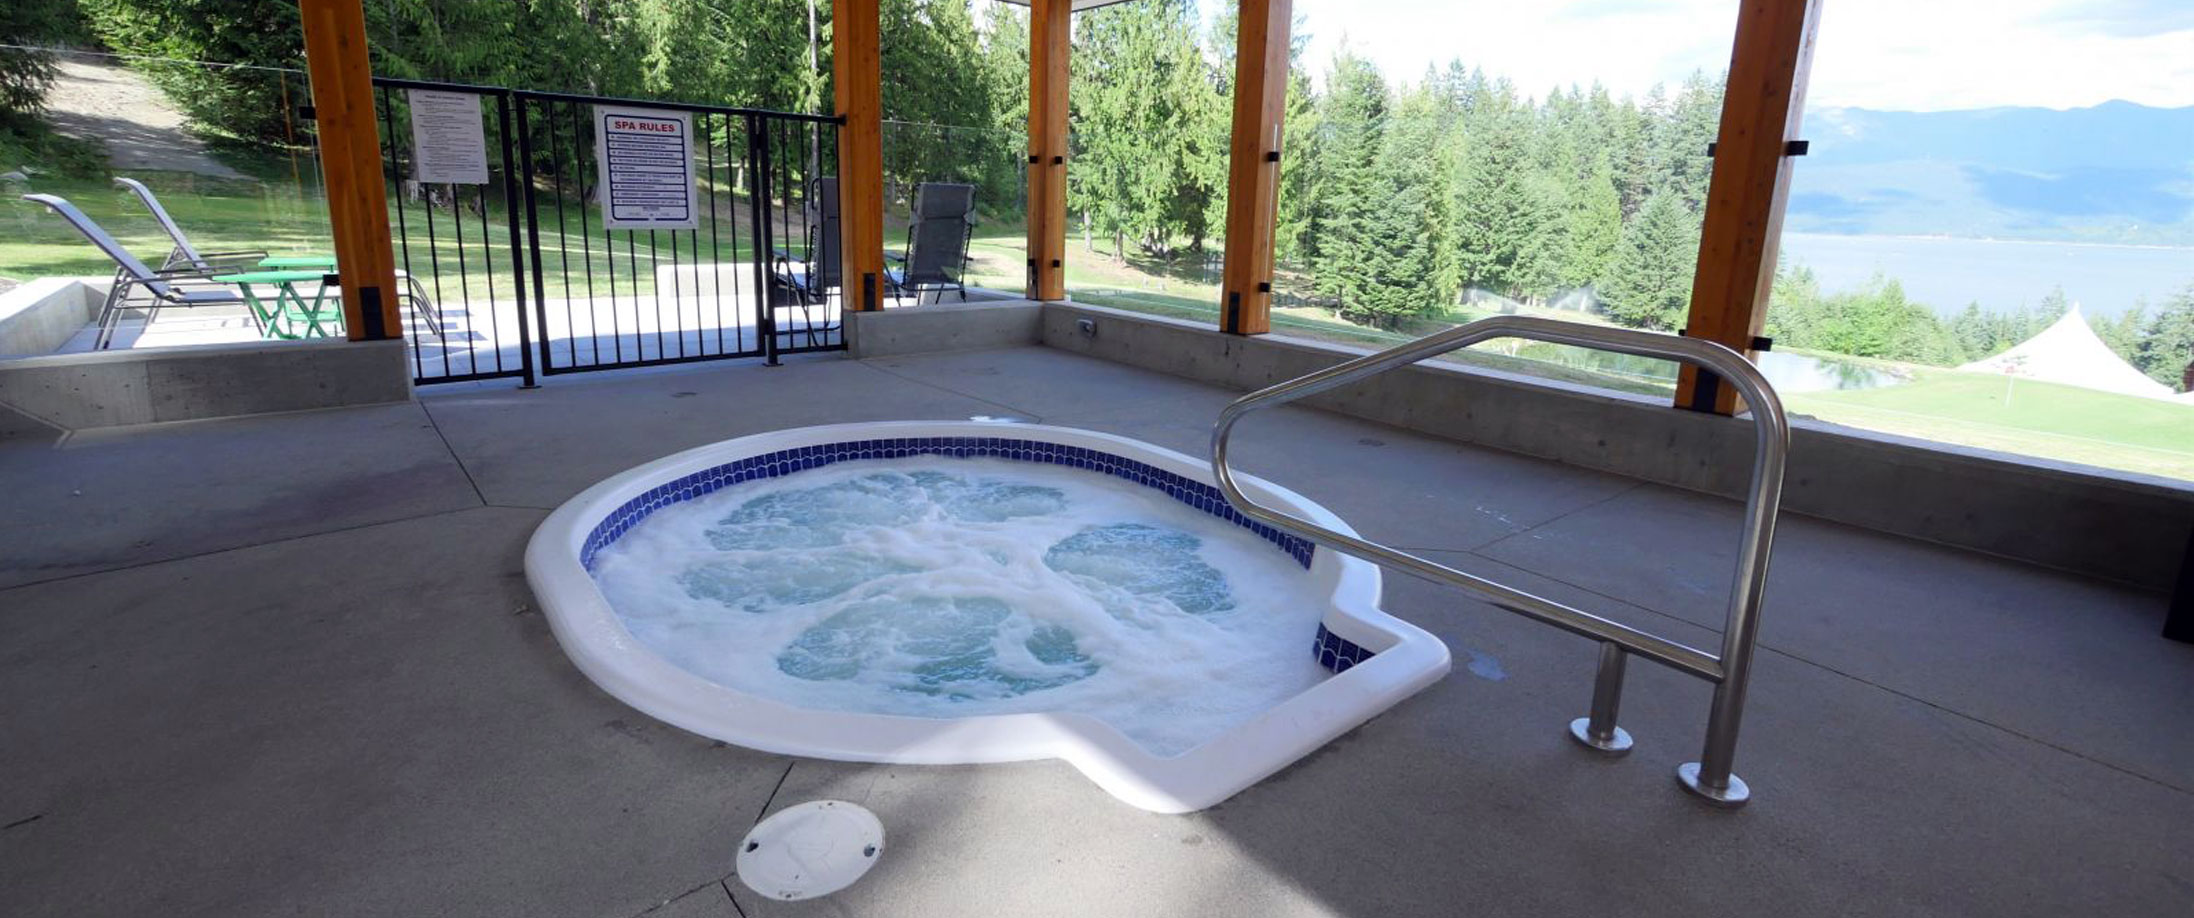 Paradise Pool and Spa Commercial Hot Tub at Kootenay Lakview Lodge